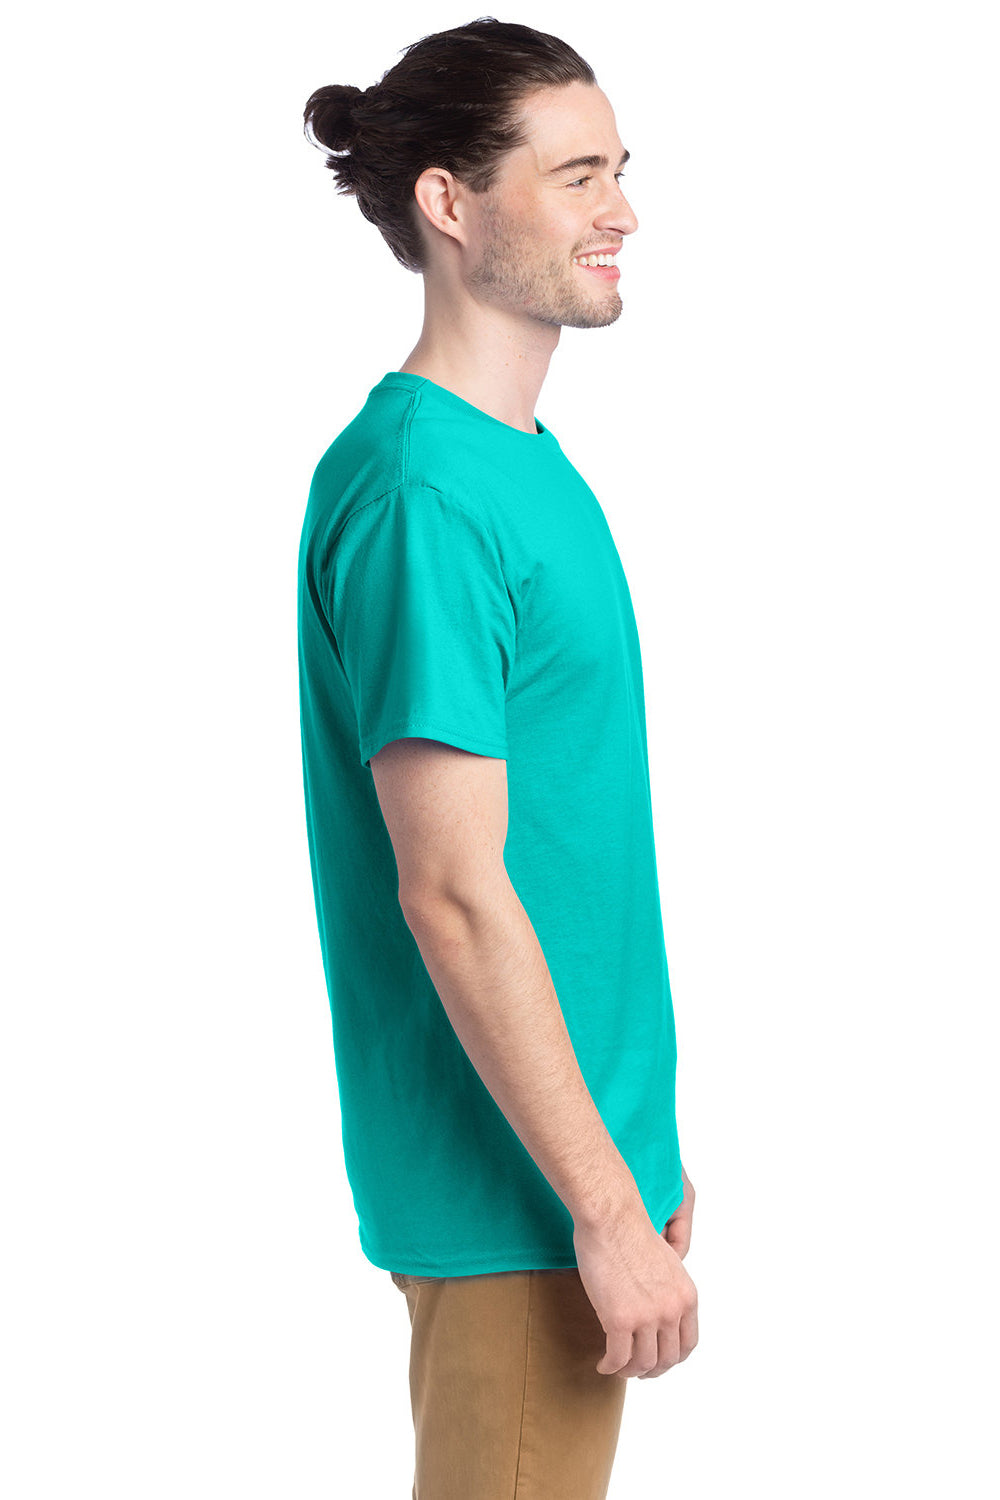 Hanes 5280 Mens ComfortSoft Short Sleeve Crewneck T-Shirt Athletic Teal Green SIde